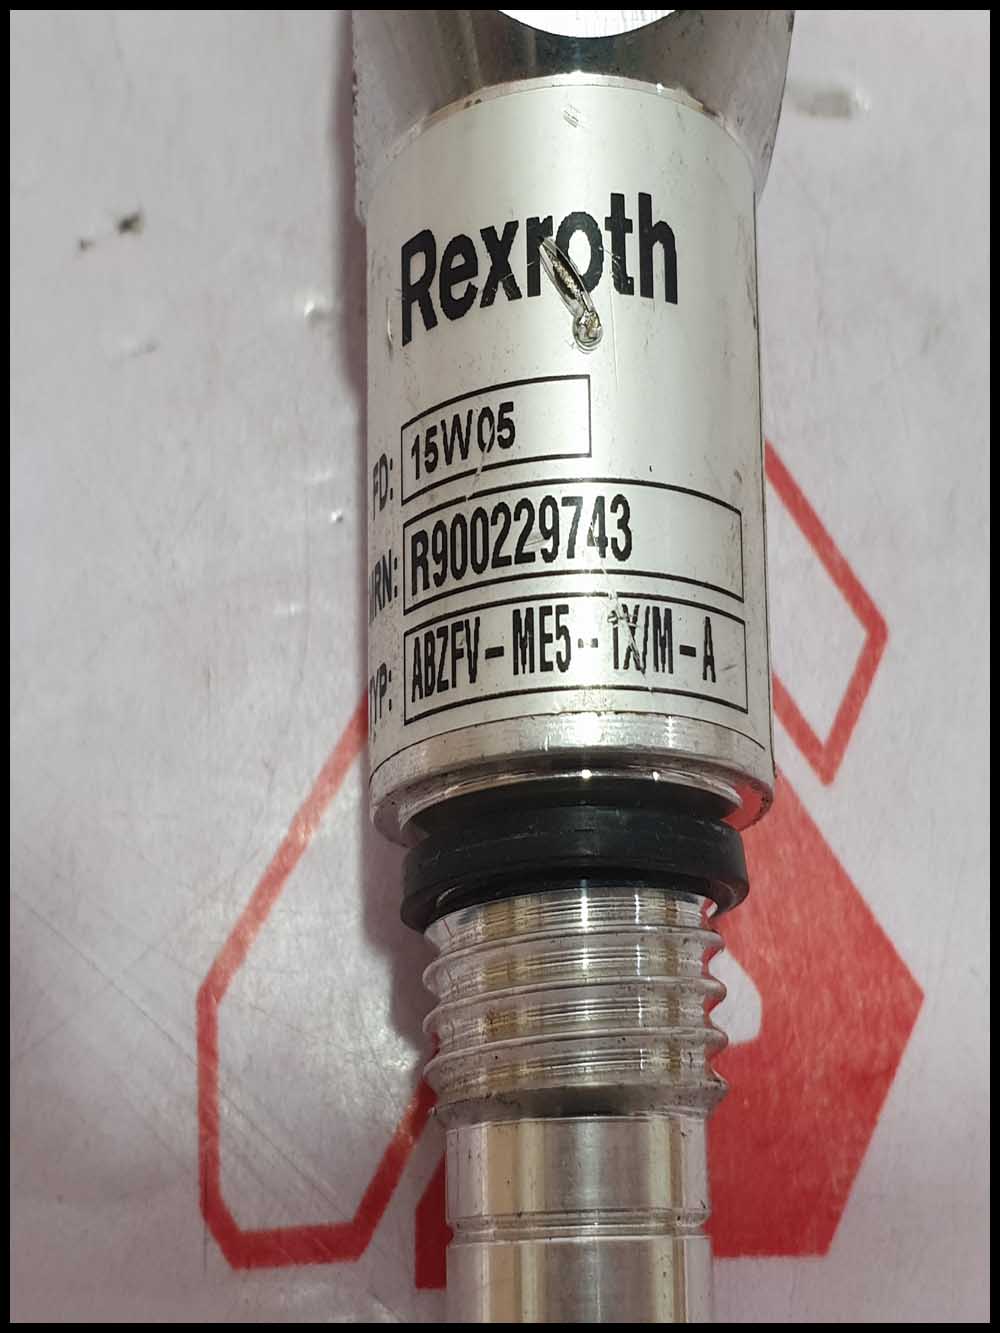 REXROTH ABZFV-ME5-1X  M-A Valvule R900229743